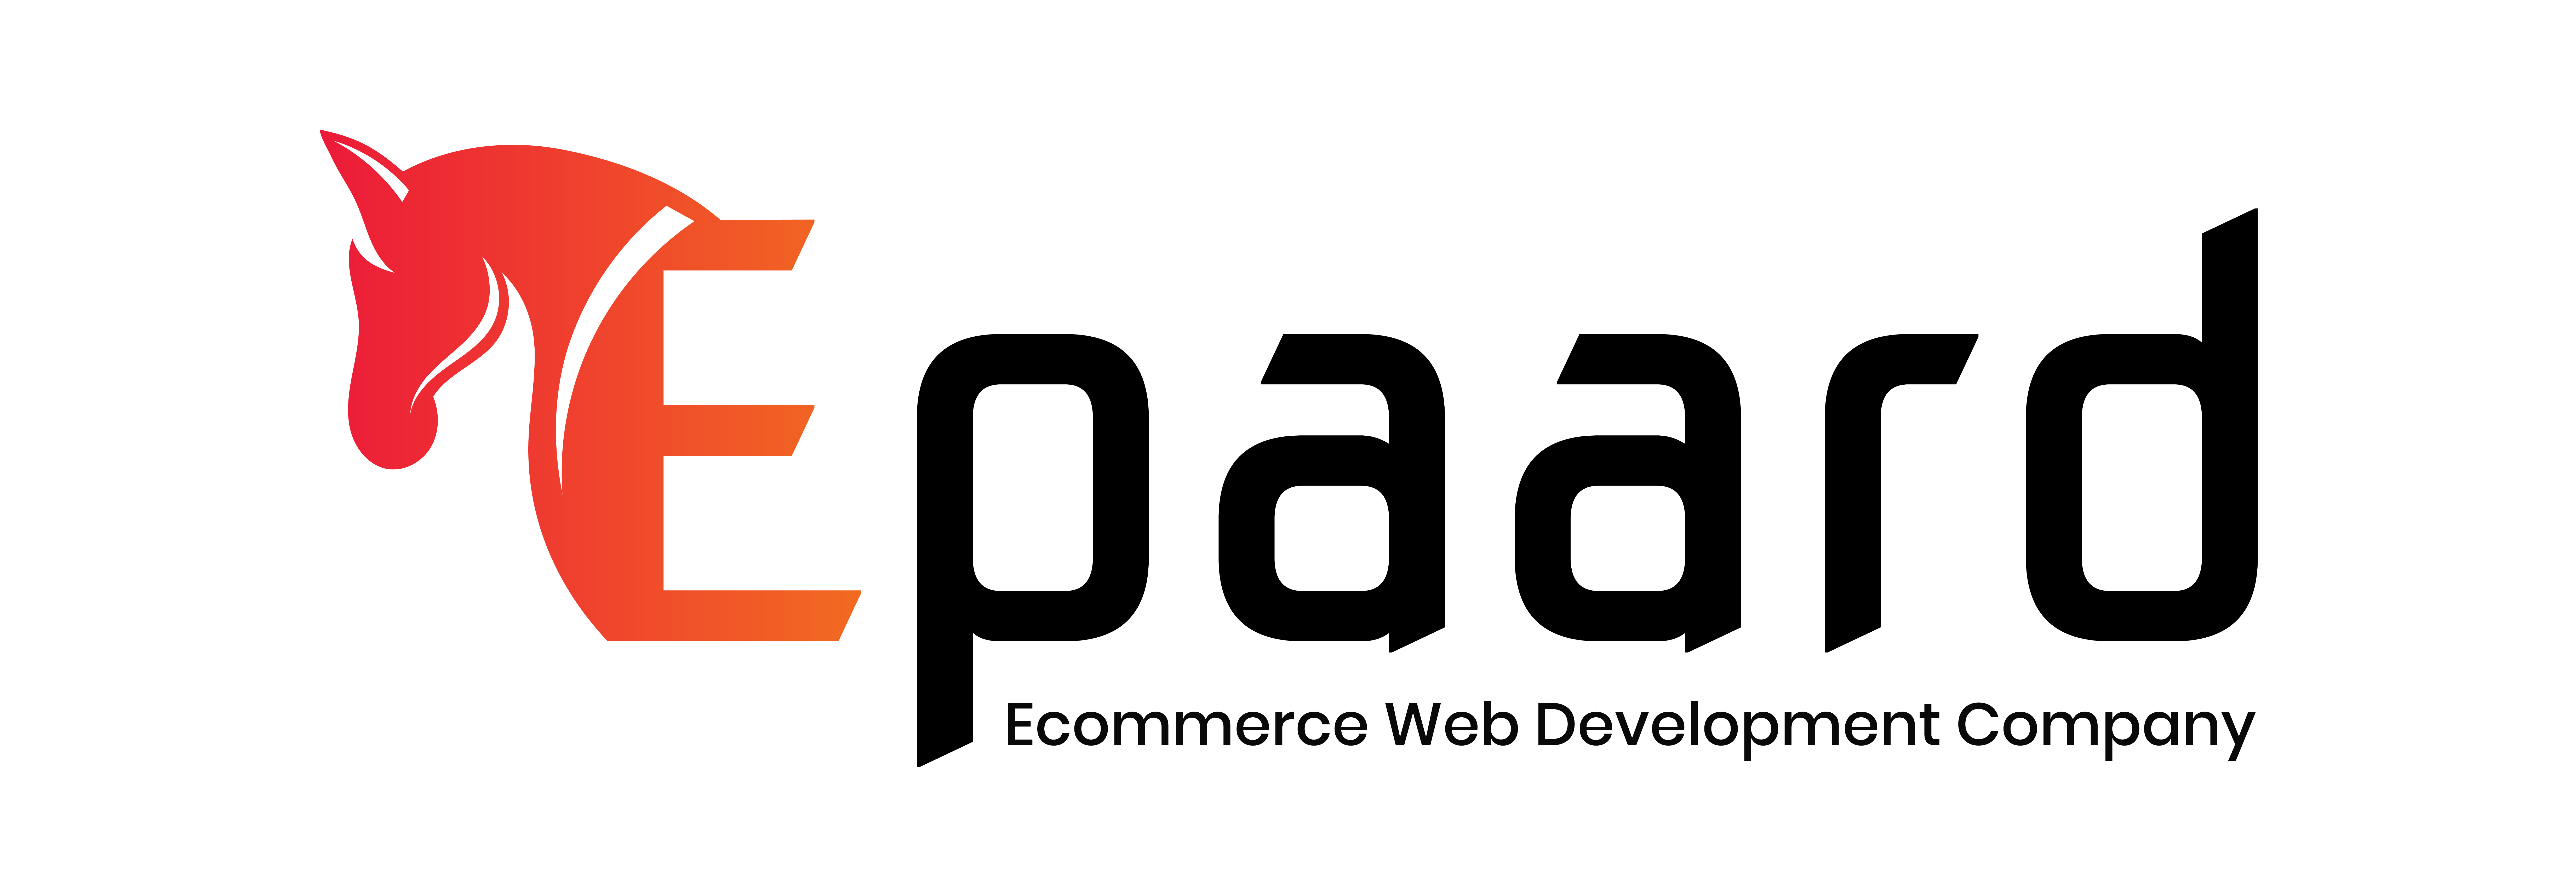 Epaard (Pvt) Ltd logo